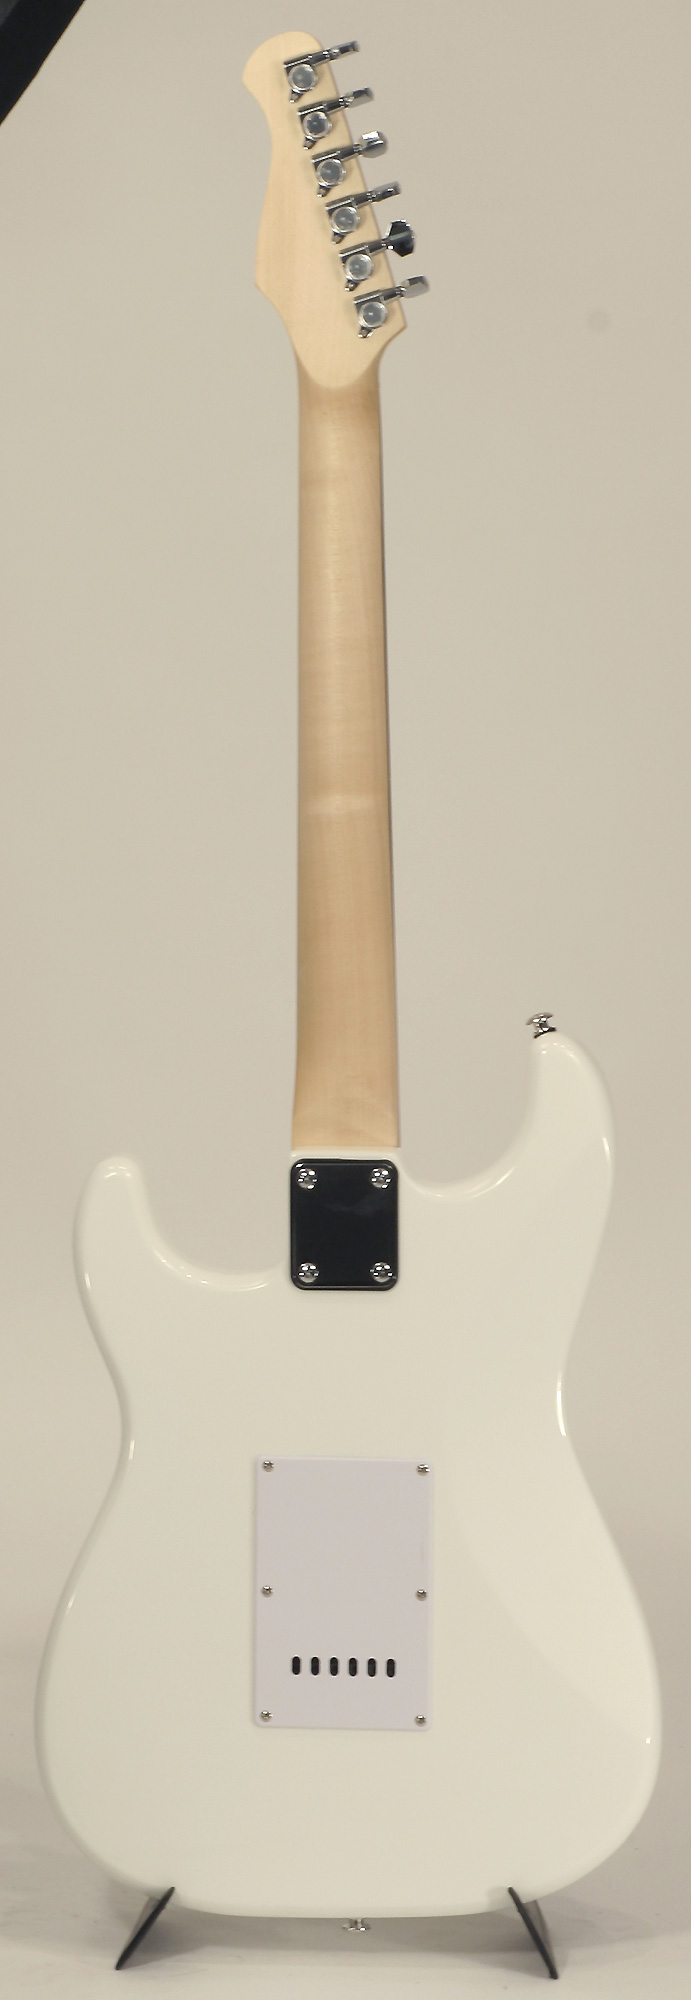 Eastone Str70-wht 3s Pur - Ivory - Str shape electric guitar - Variation 2